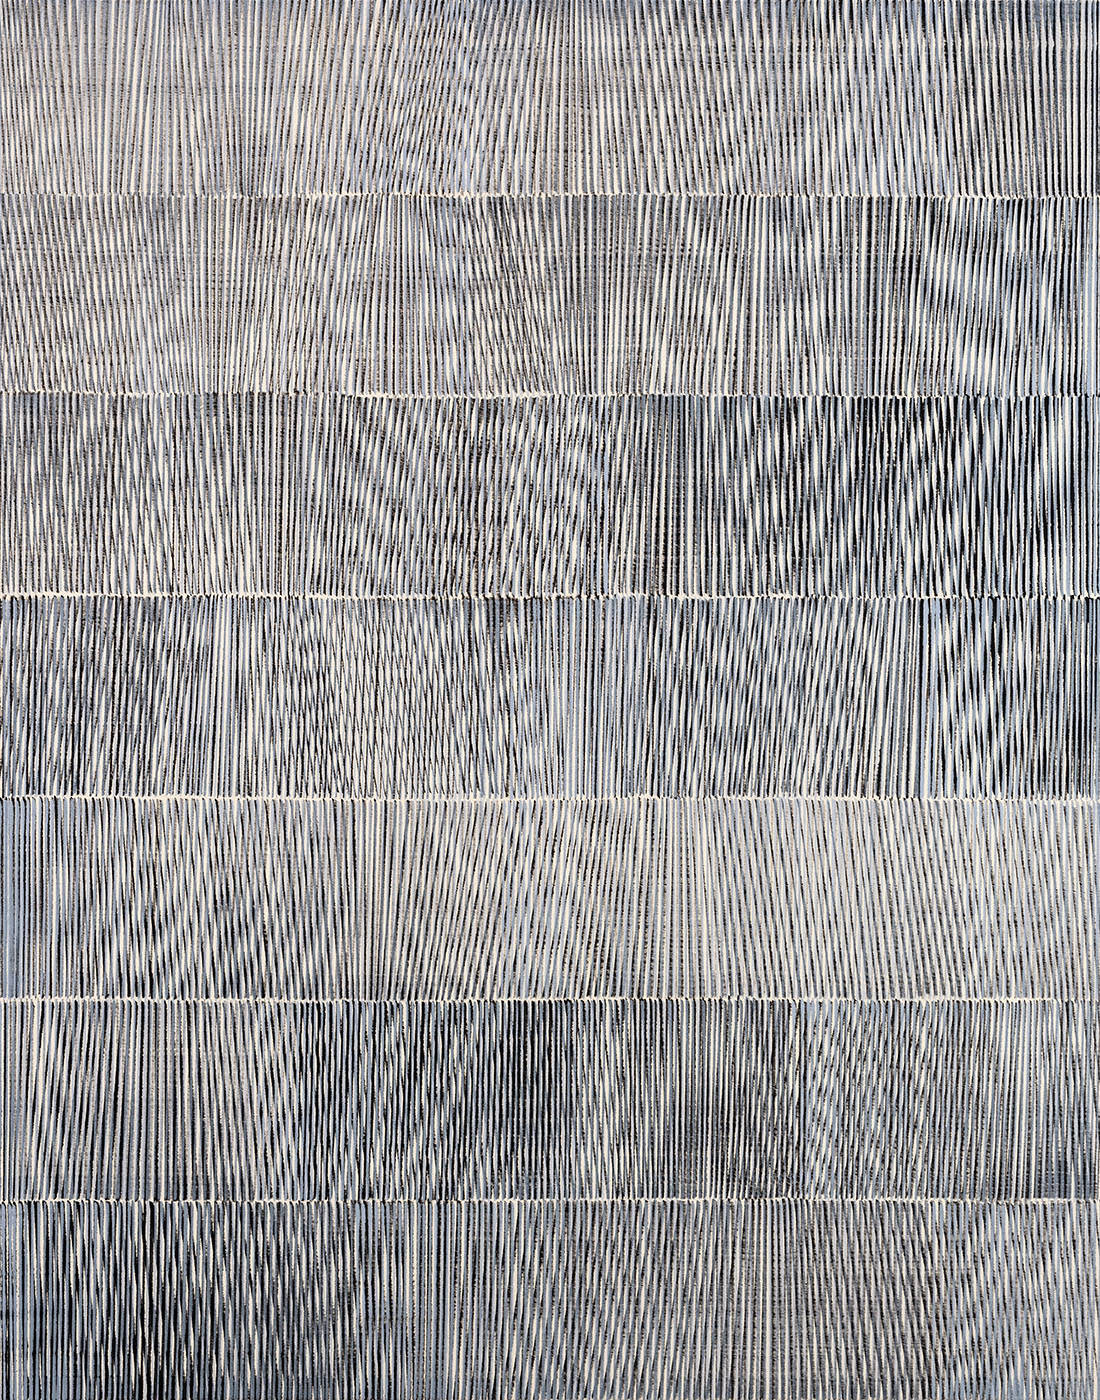 Nikola Dimitrov, Präludium IV, 2021, Pigmente, Bindemittel auf Leinwand, 140 × 110 cm